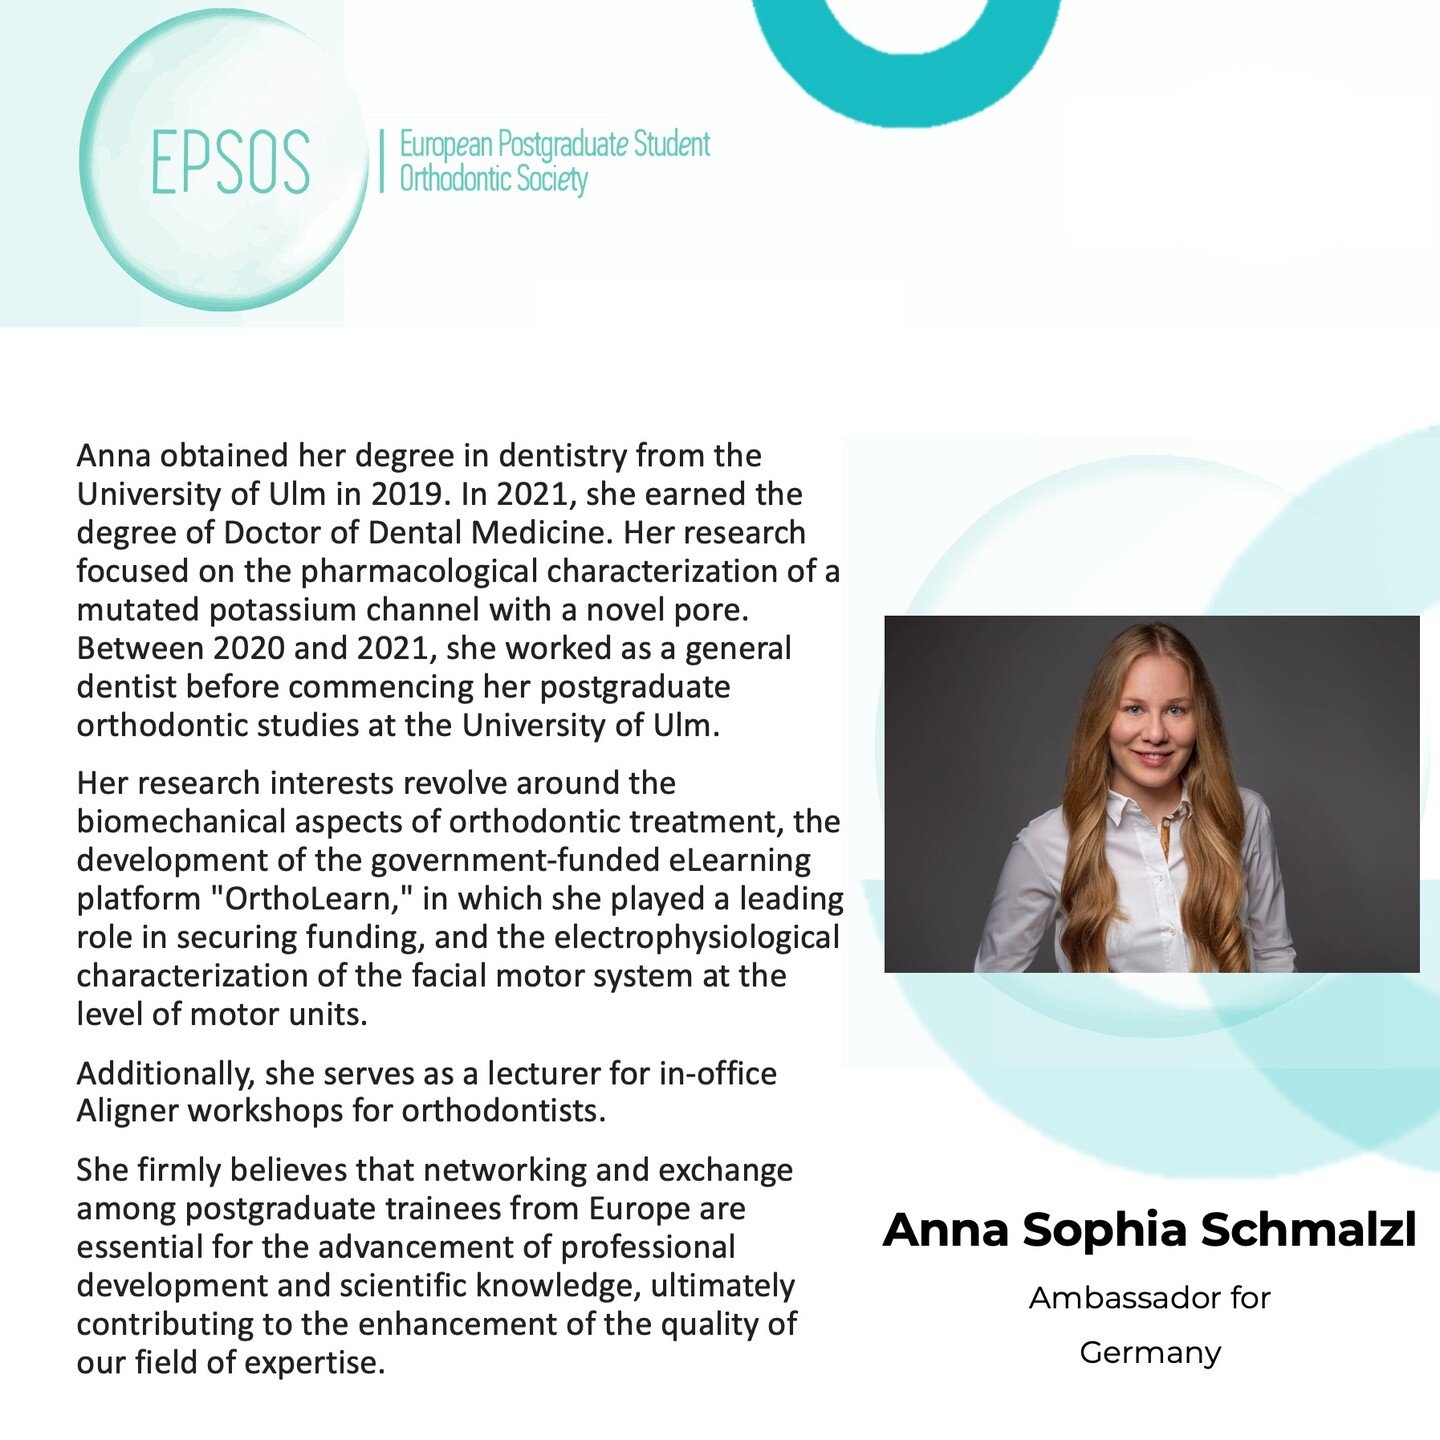 Meet Anna, the new EPSOS ambassador for Germany! 👋